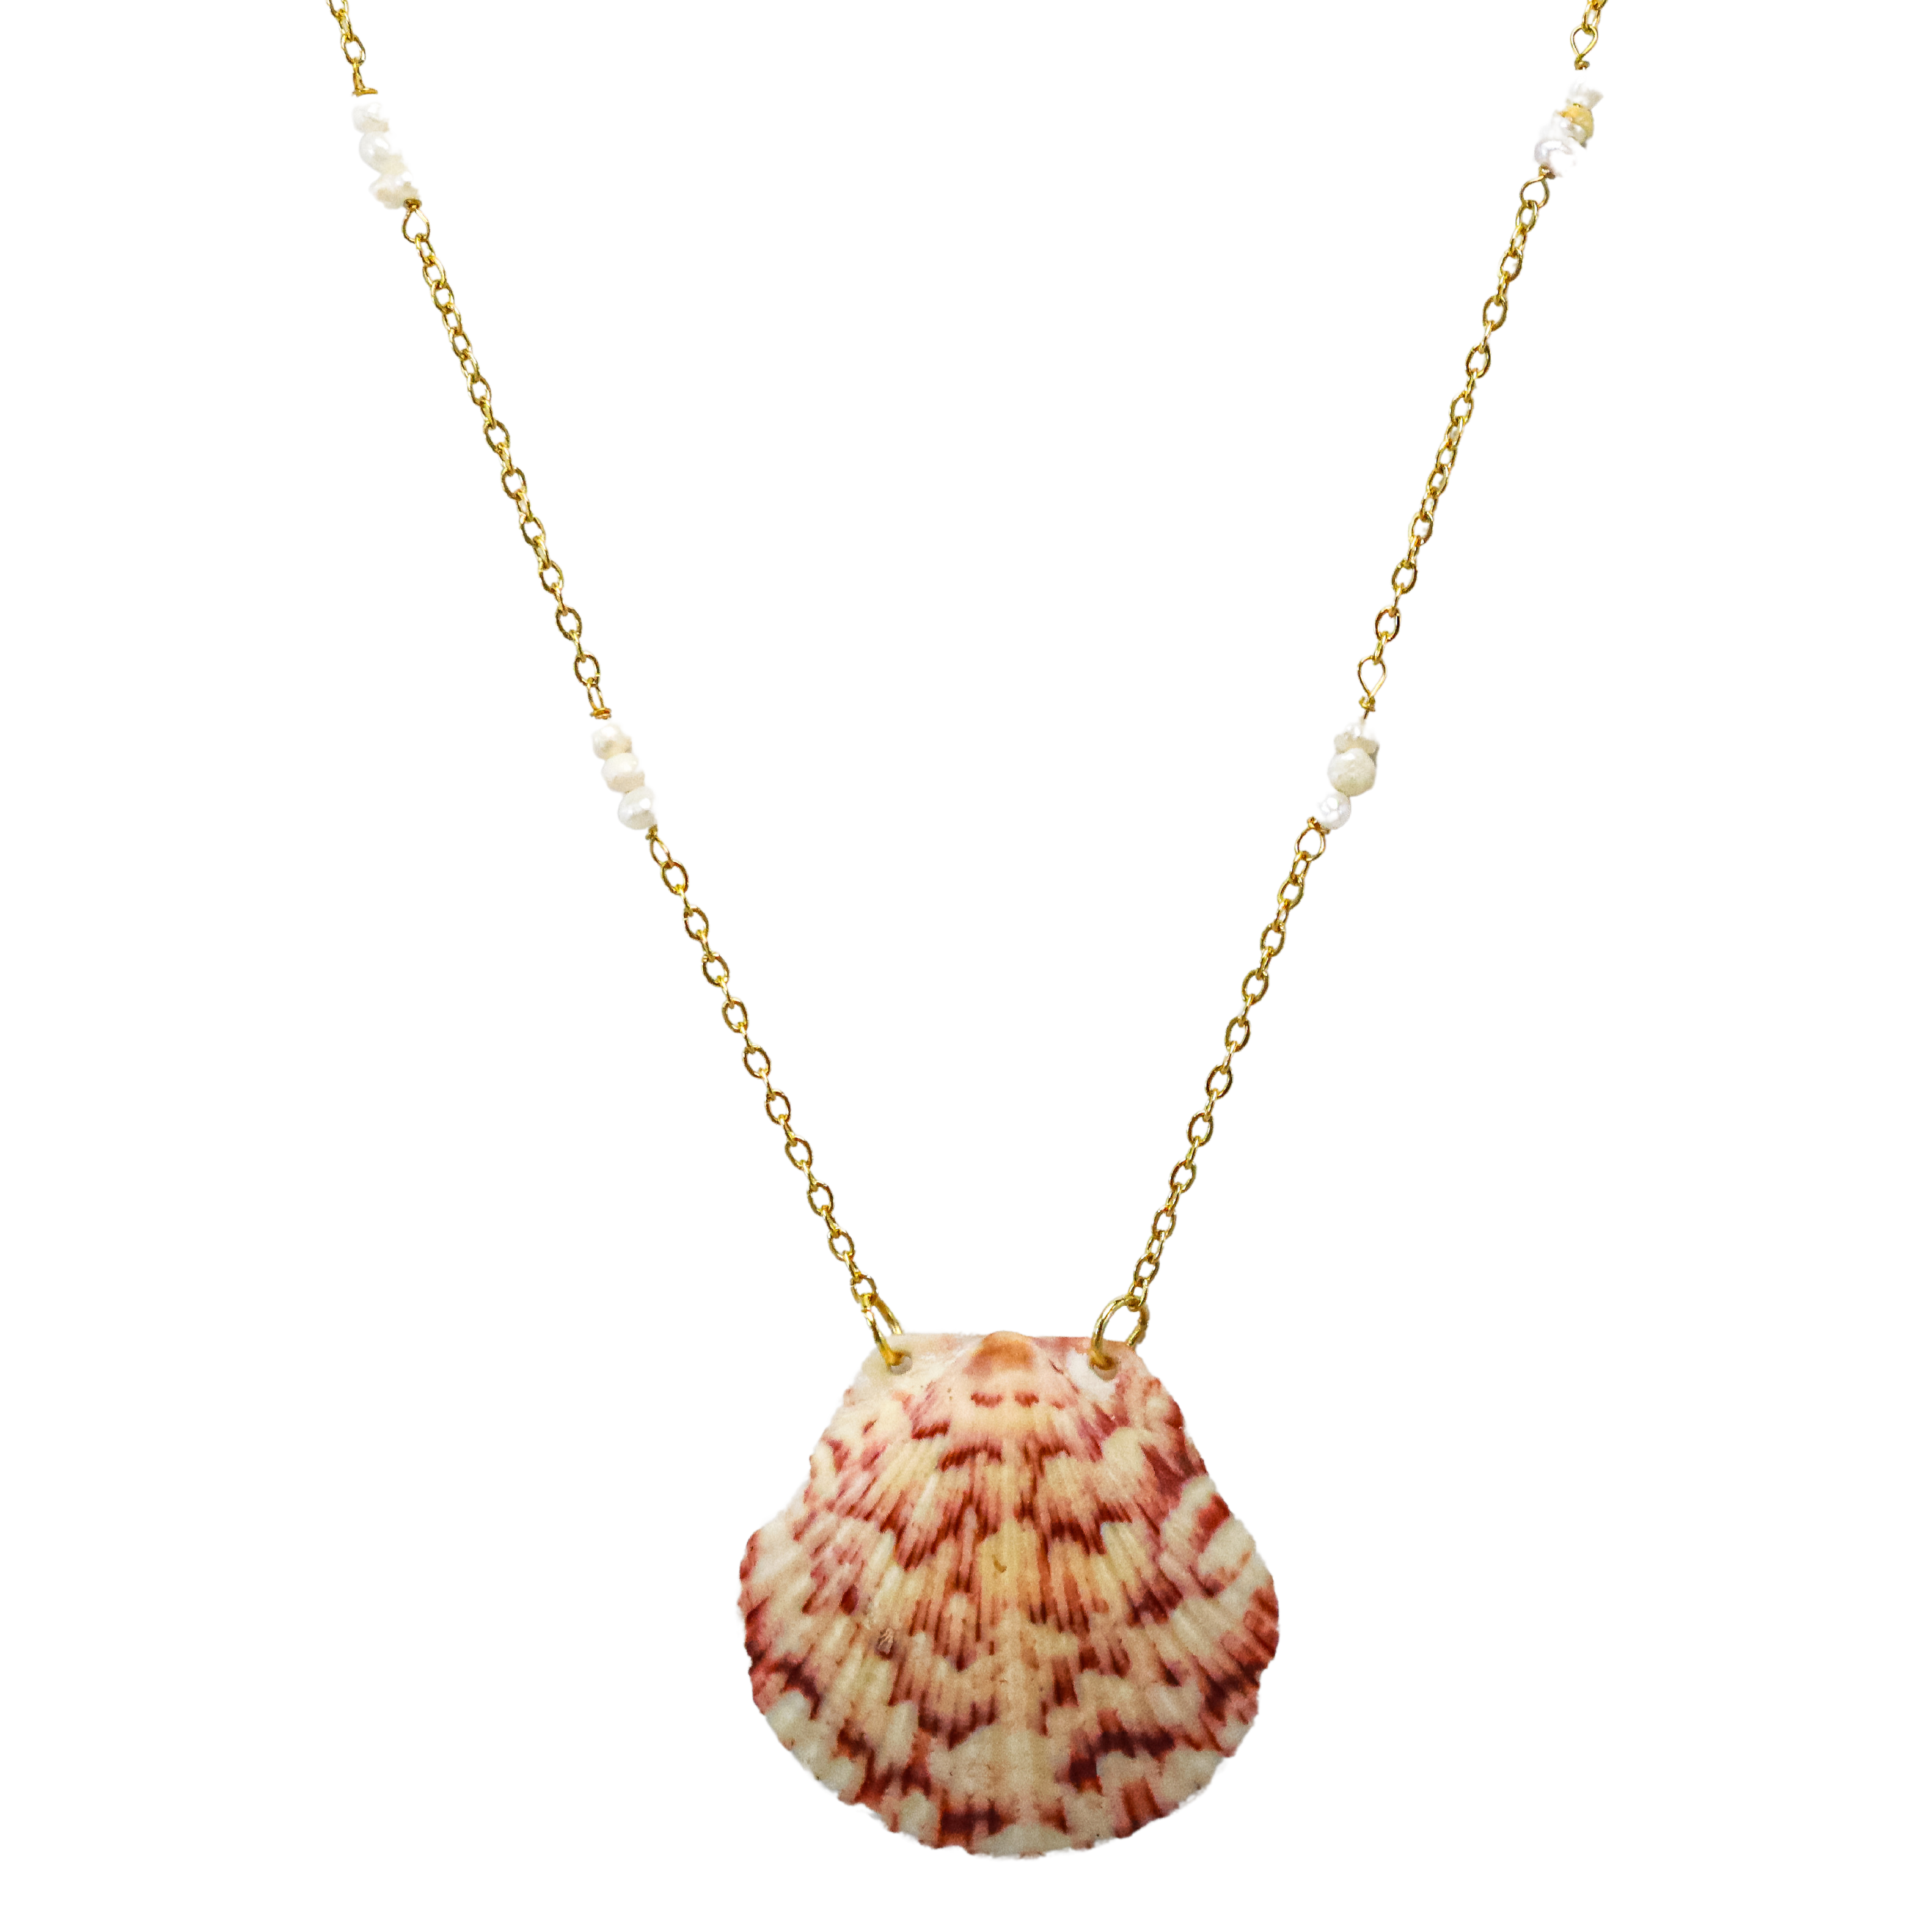 Kahlani’s Shell Necklace